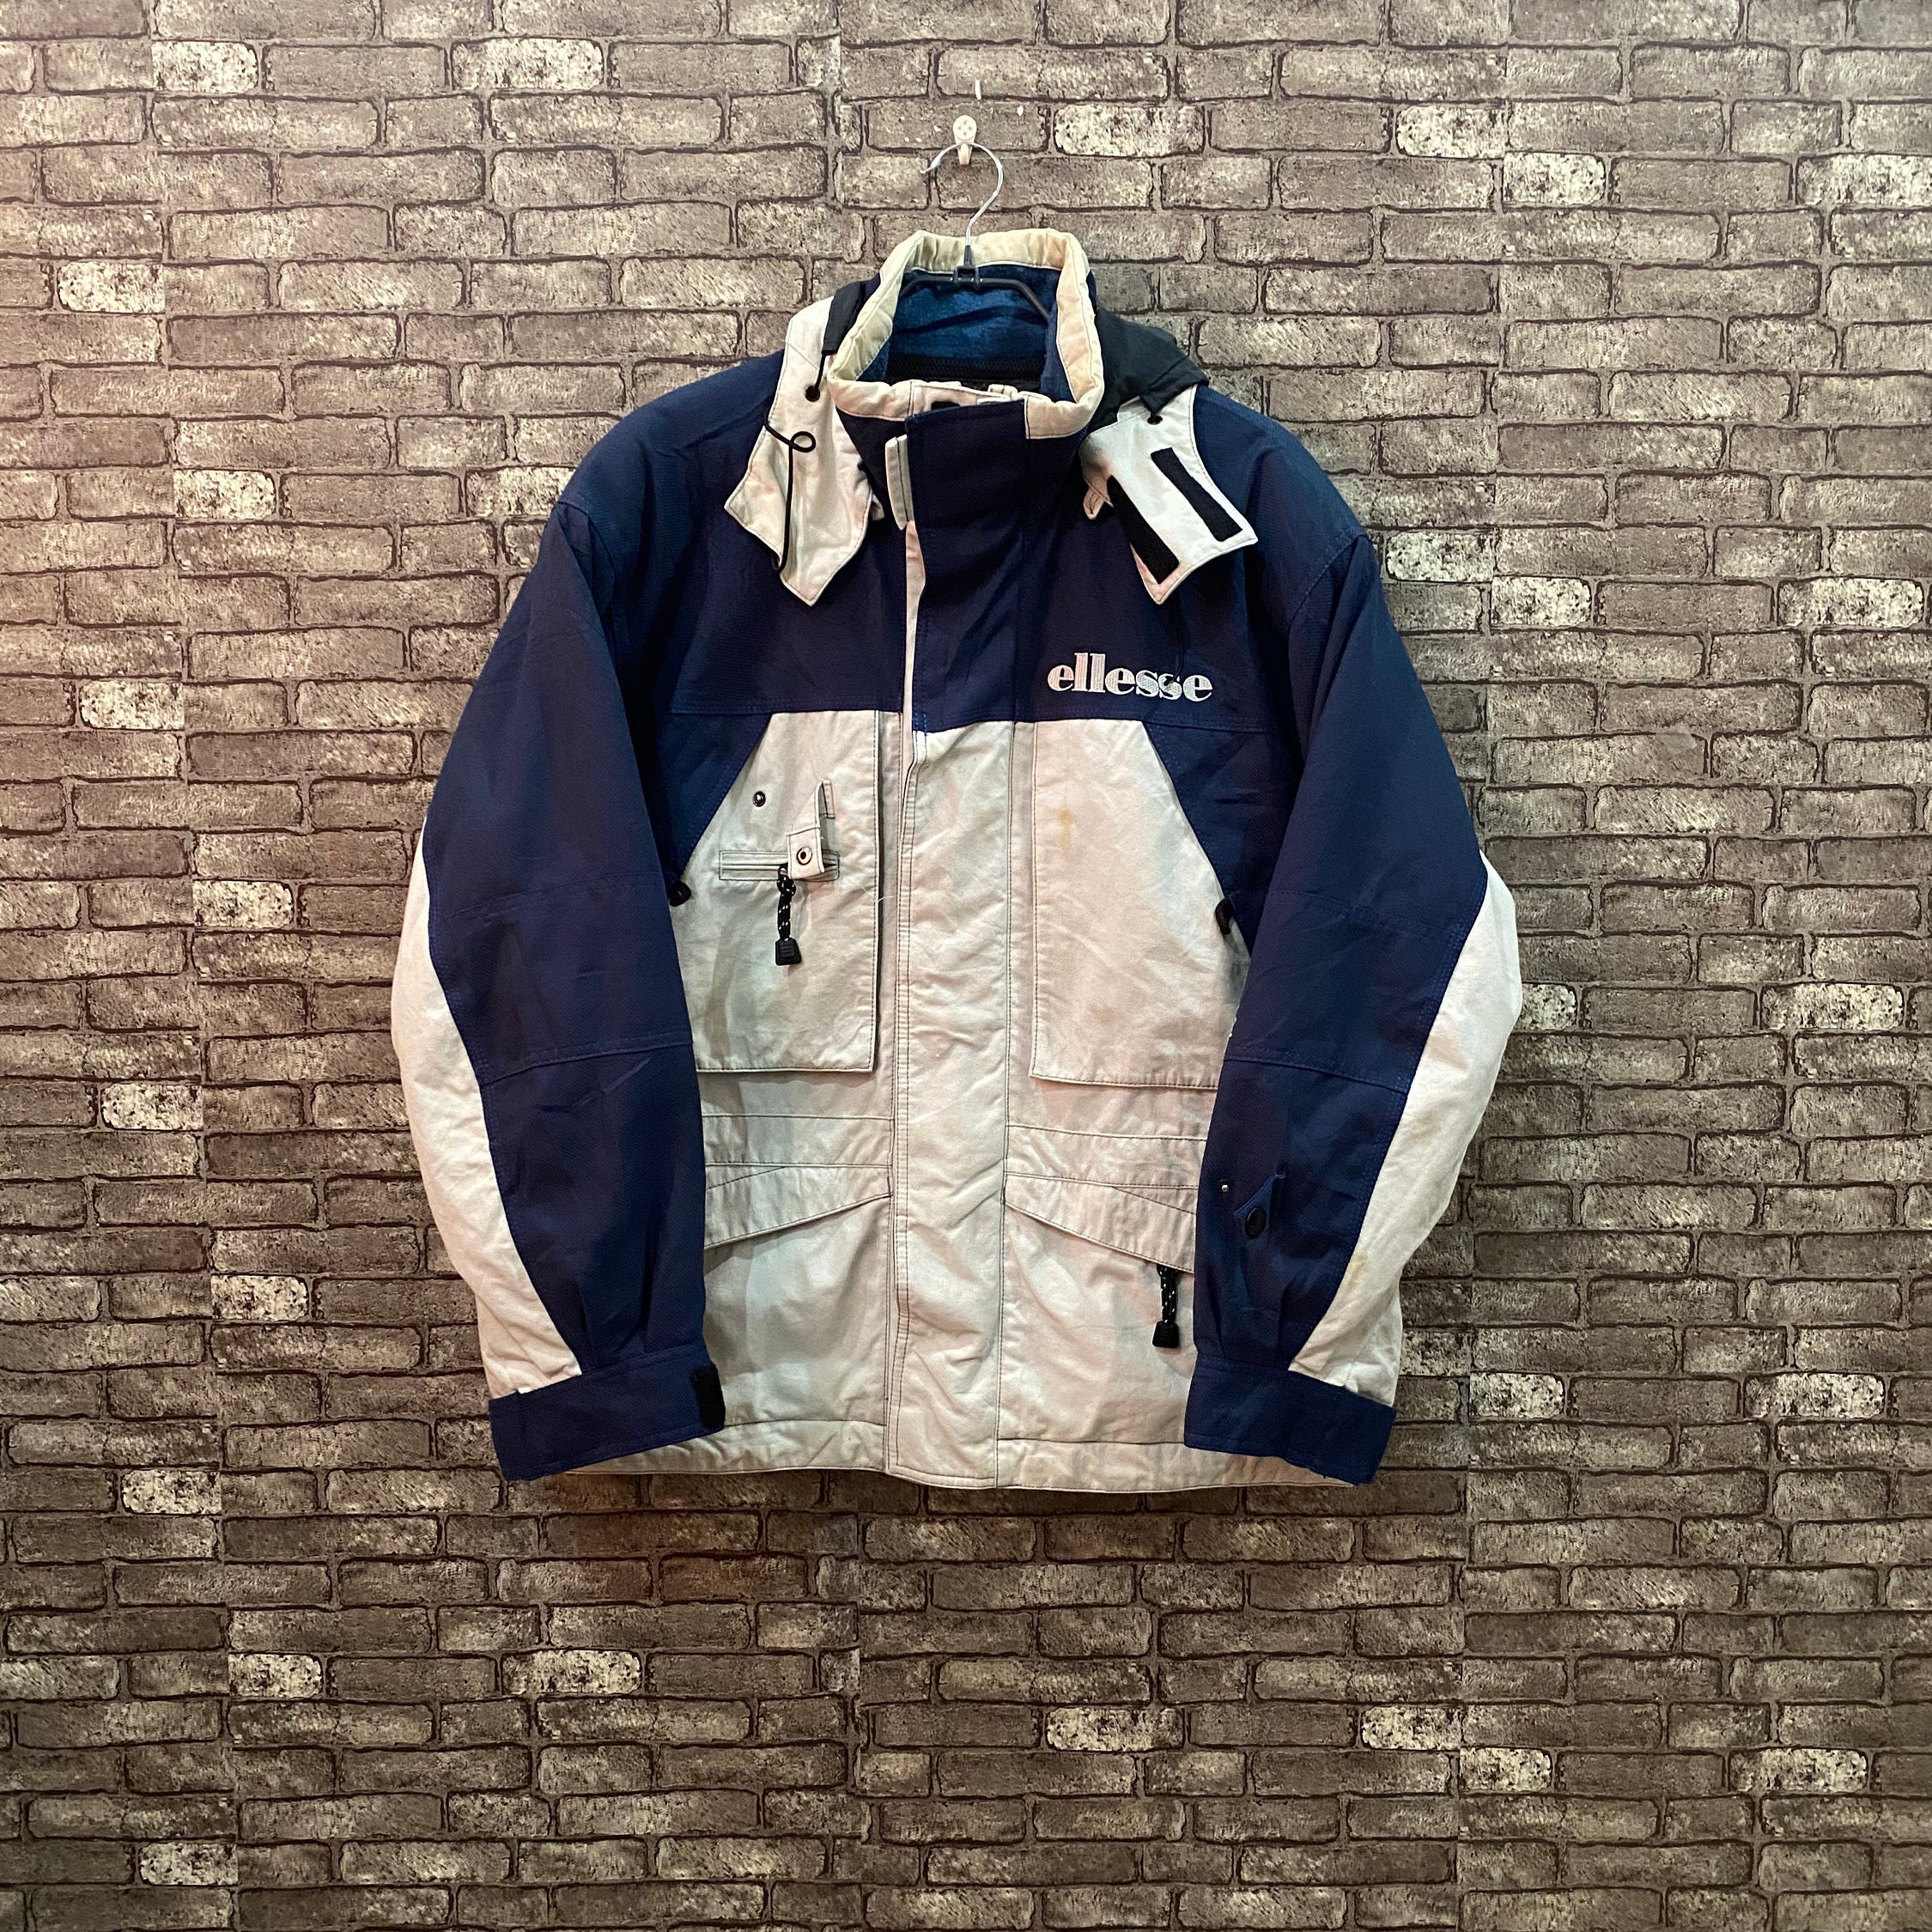 Vintage Team Ellesse Ski Jacket Retro Style Winter Jacket Blue | Etsy